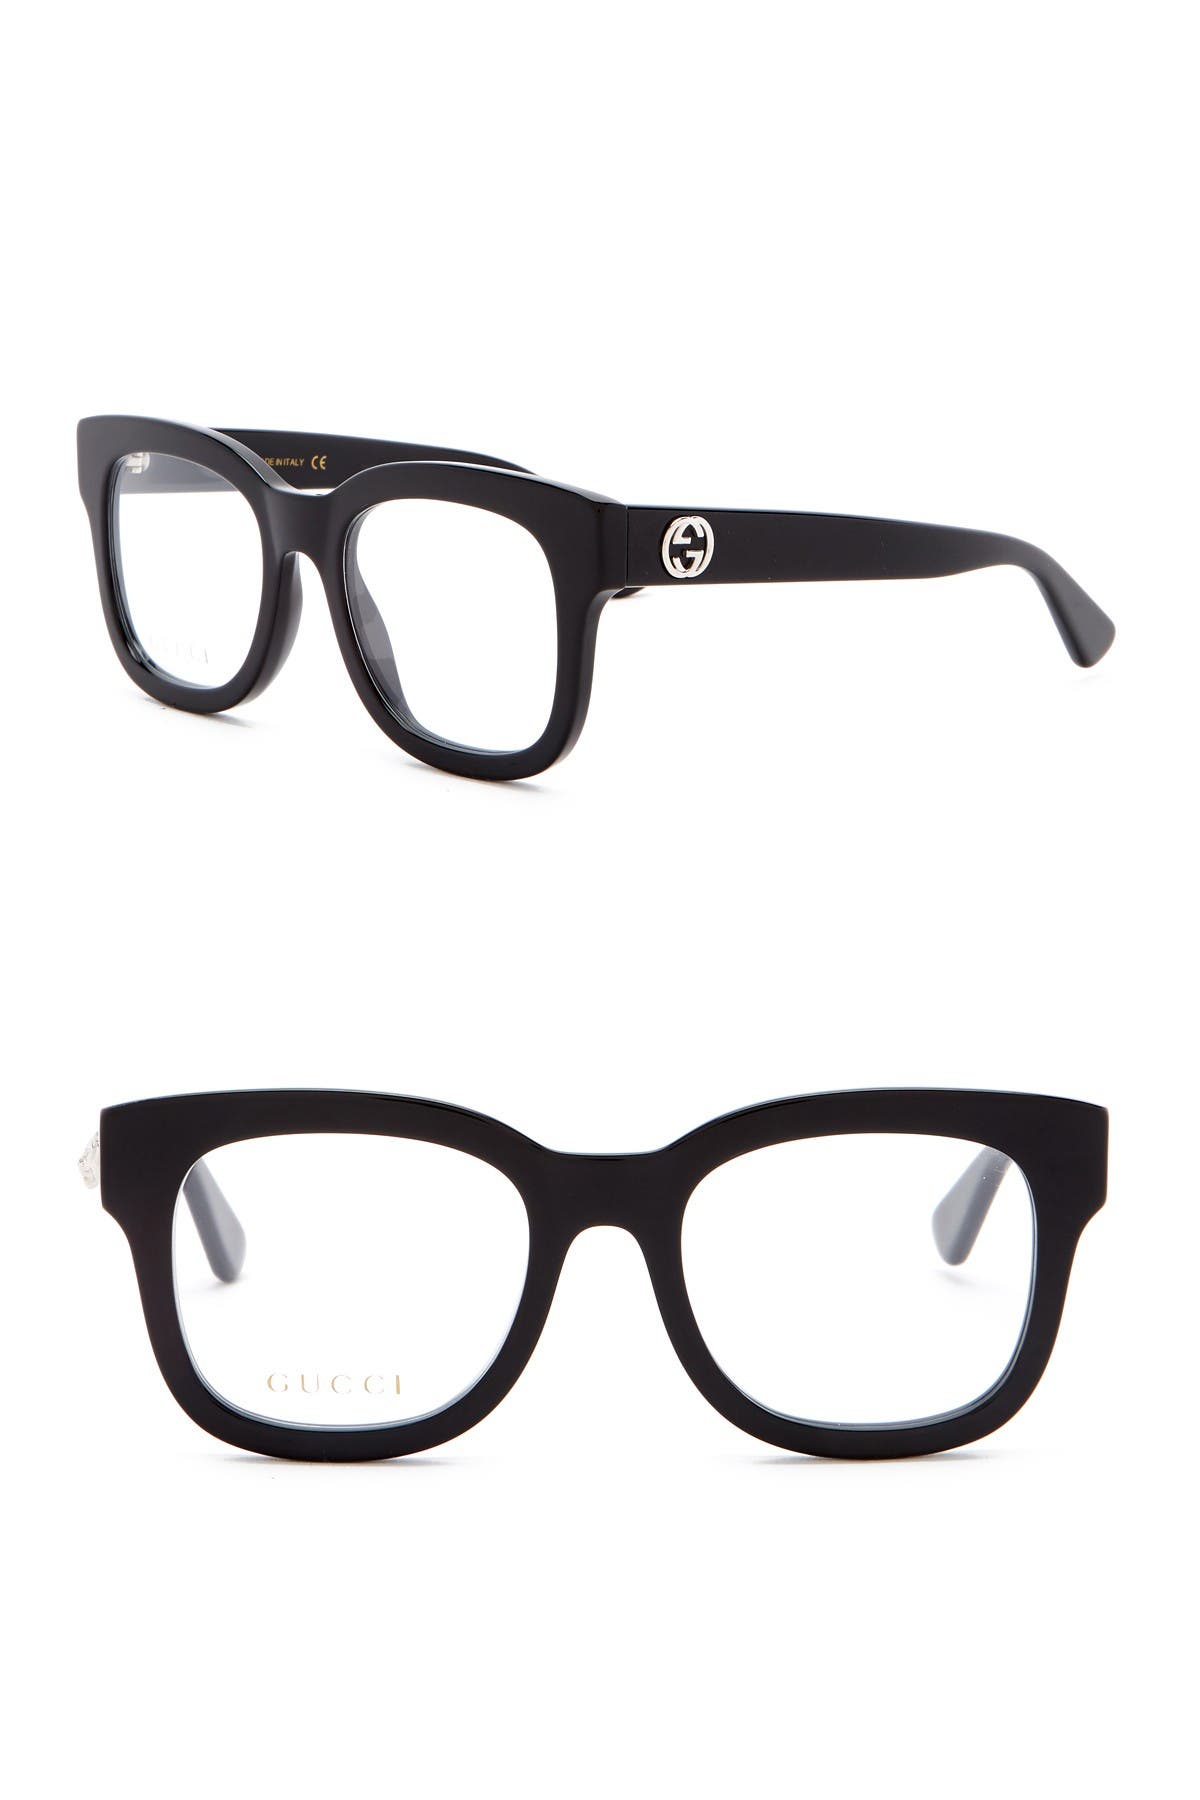 gucci square acetate optical glasses